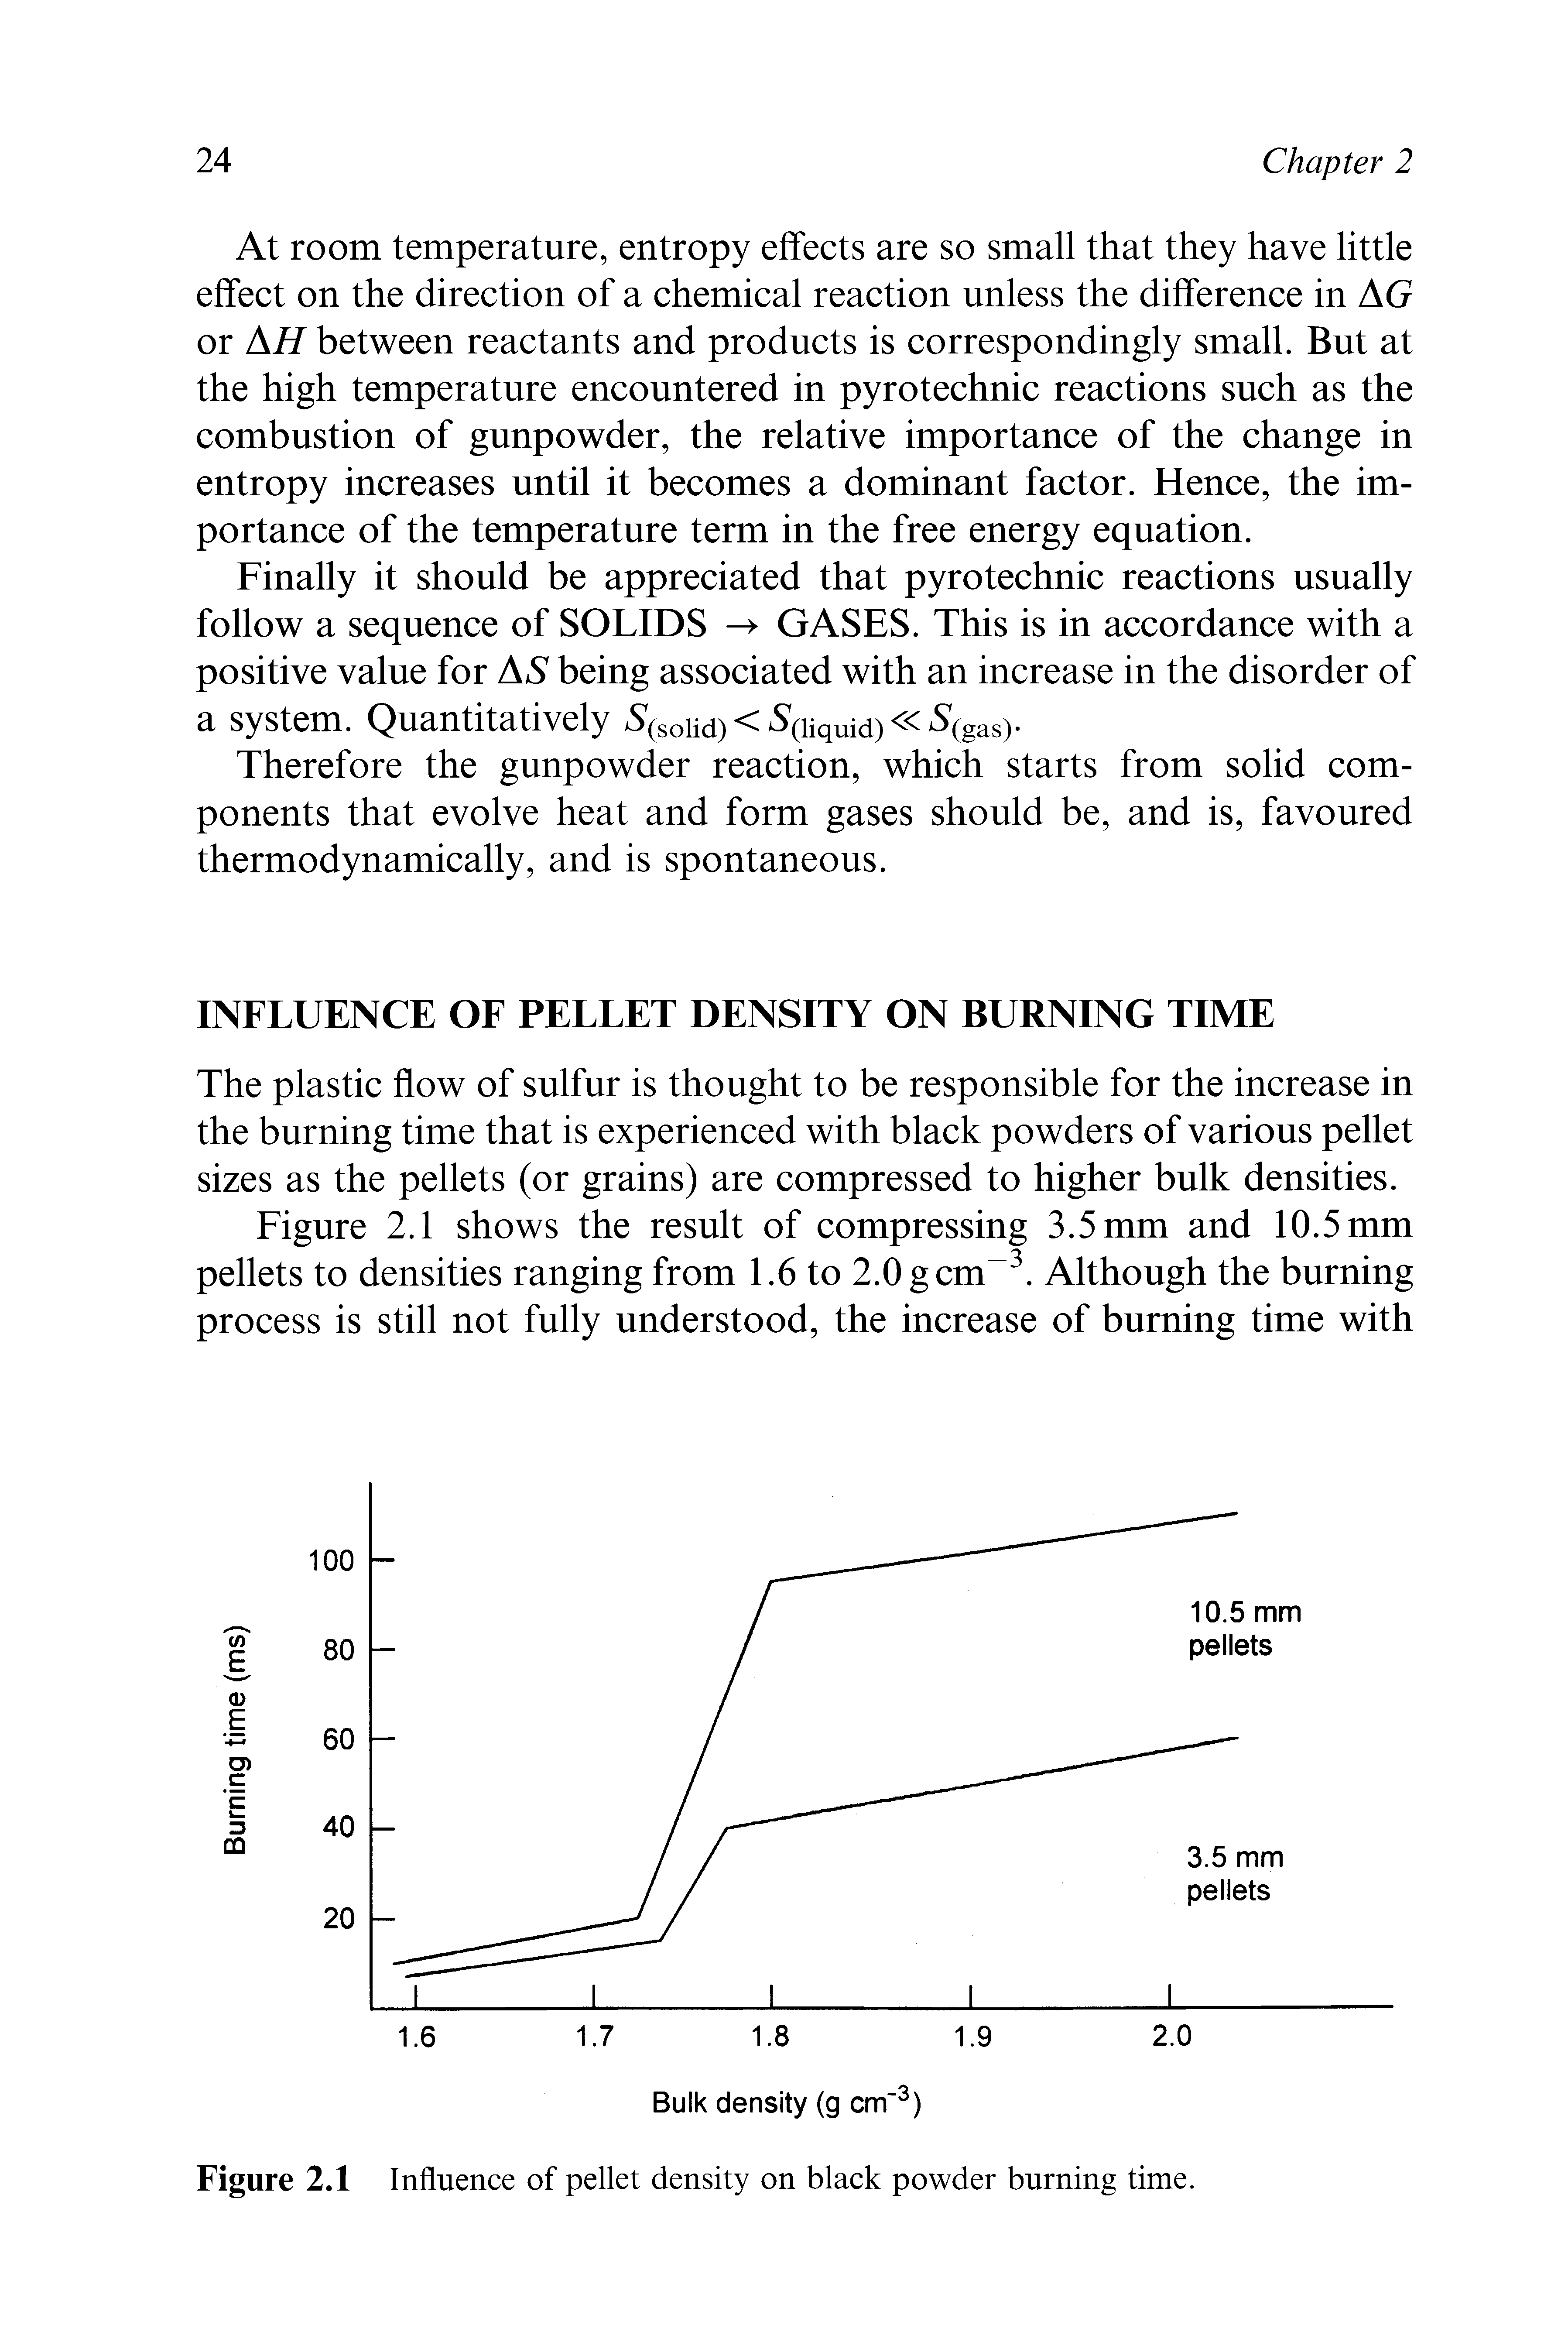 Figure 2.1 Influence of pellet density on black powder burning time.